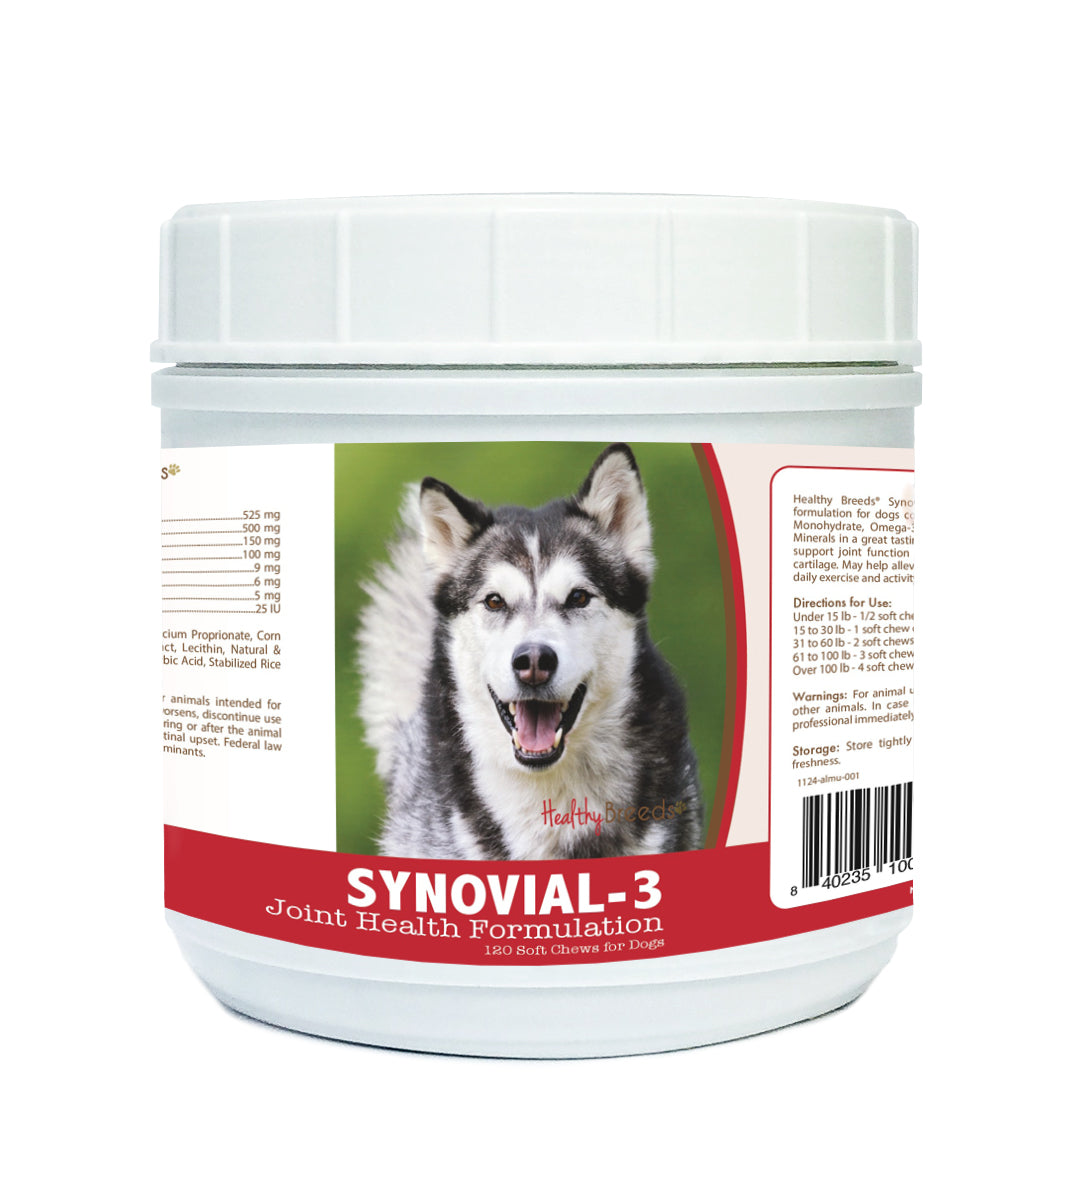 Alaskan Malamute Synovial-3 Joint Health Formulation Soft Chews 120 Count